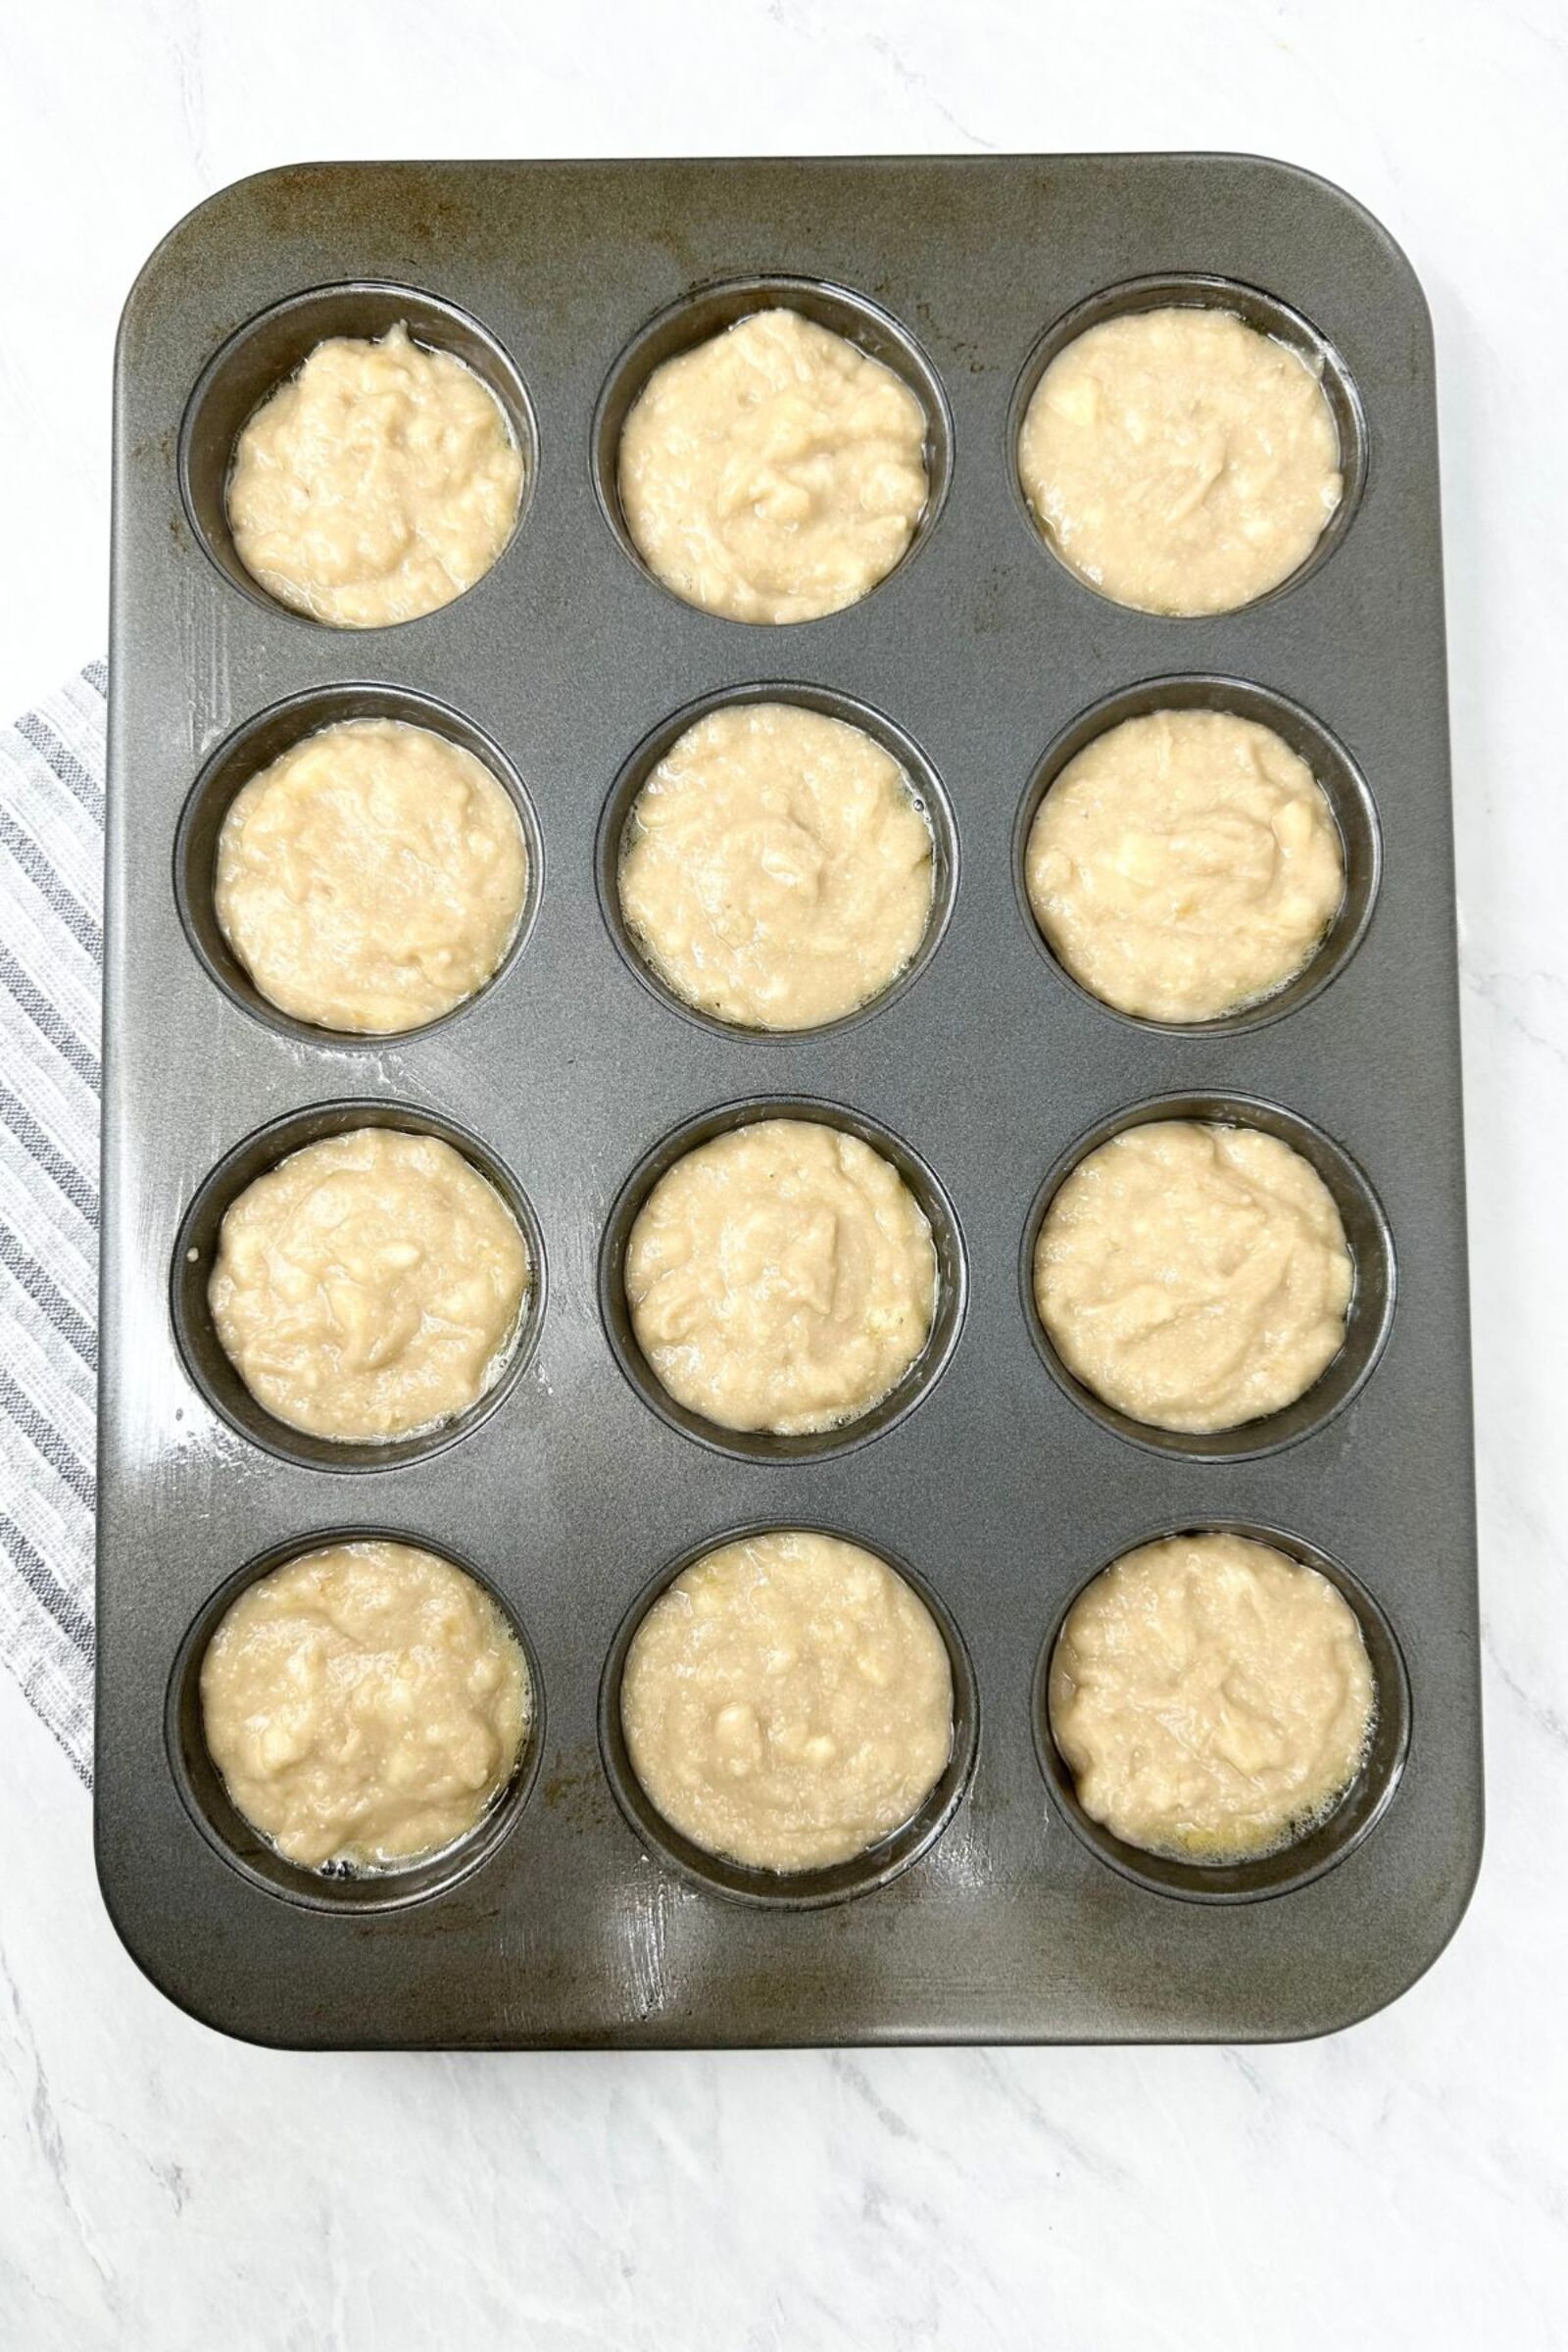 Cassava Flour Banana Muffins unbaked in a muffin pan.